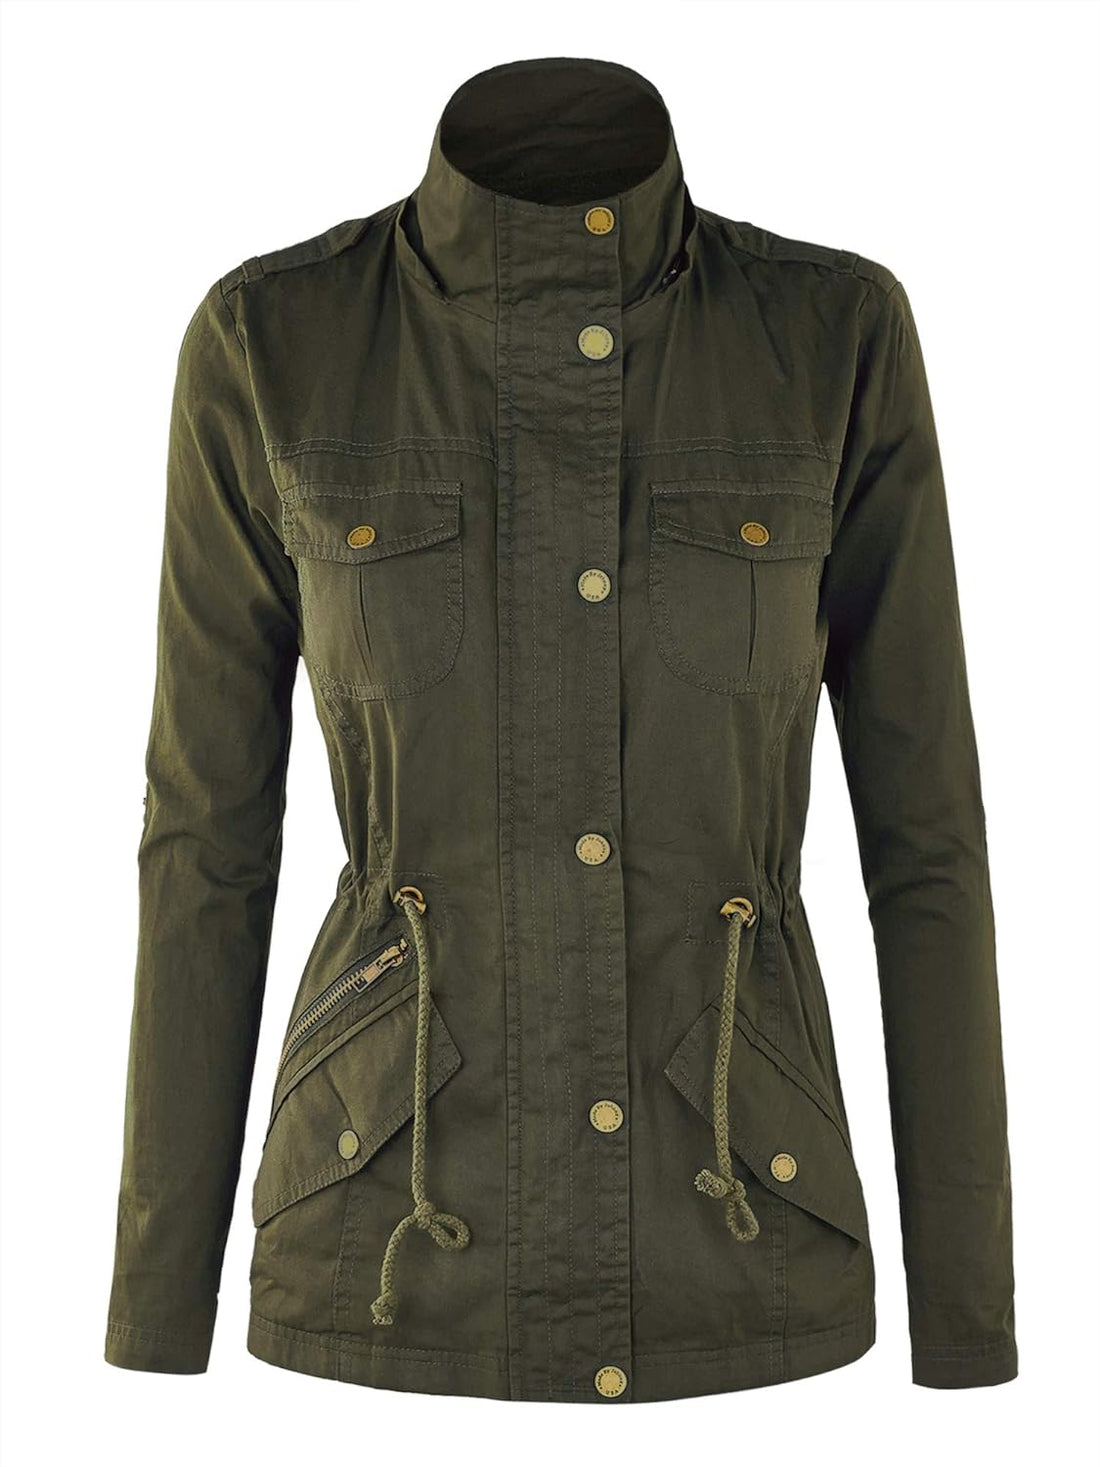 Lock and Love Women's Casual Military Anorak Jacket - Lightweight Detachable Hooded Safari Utility